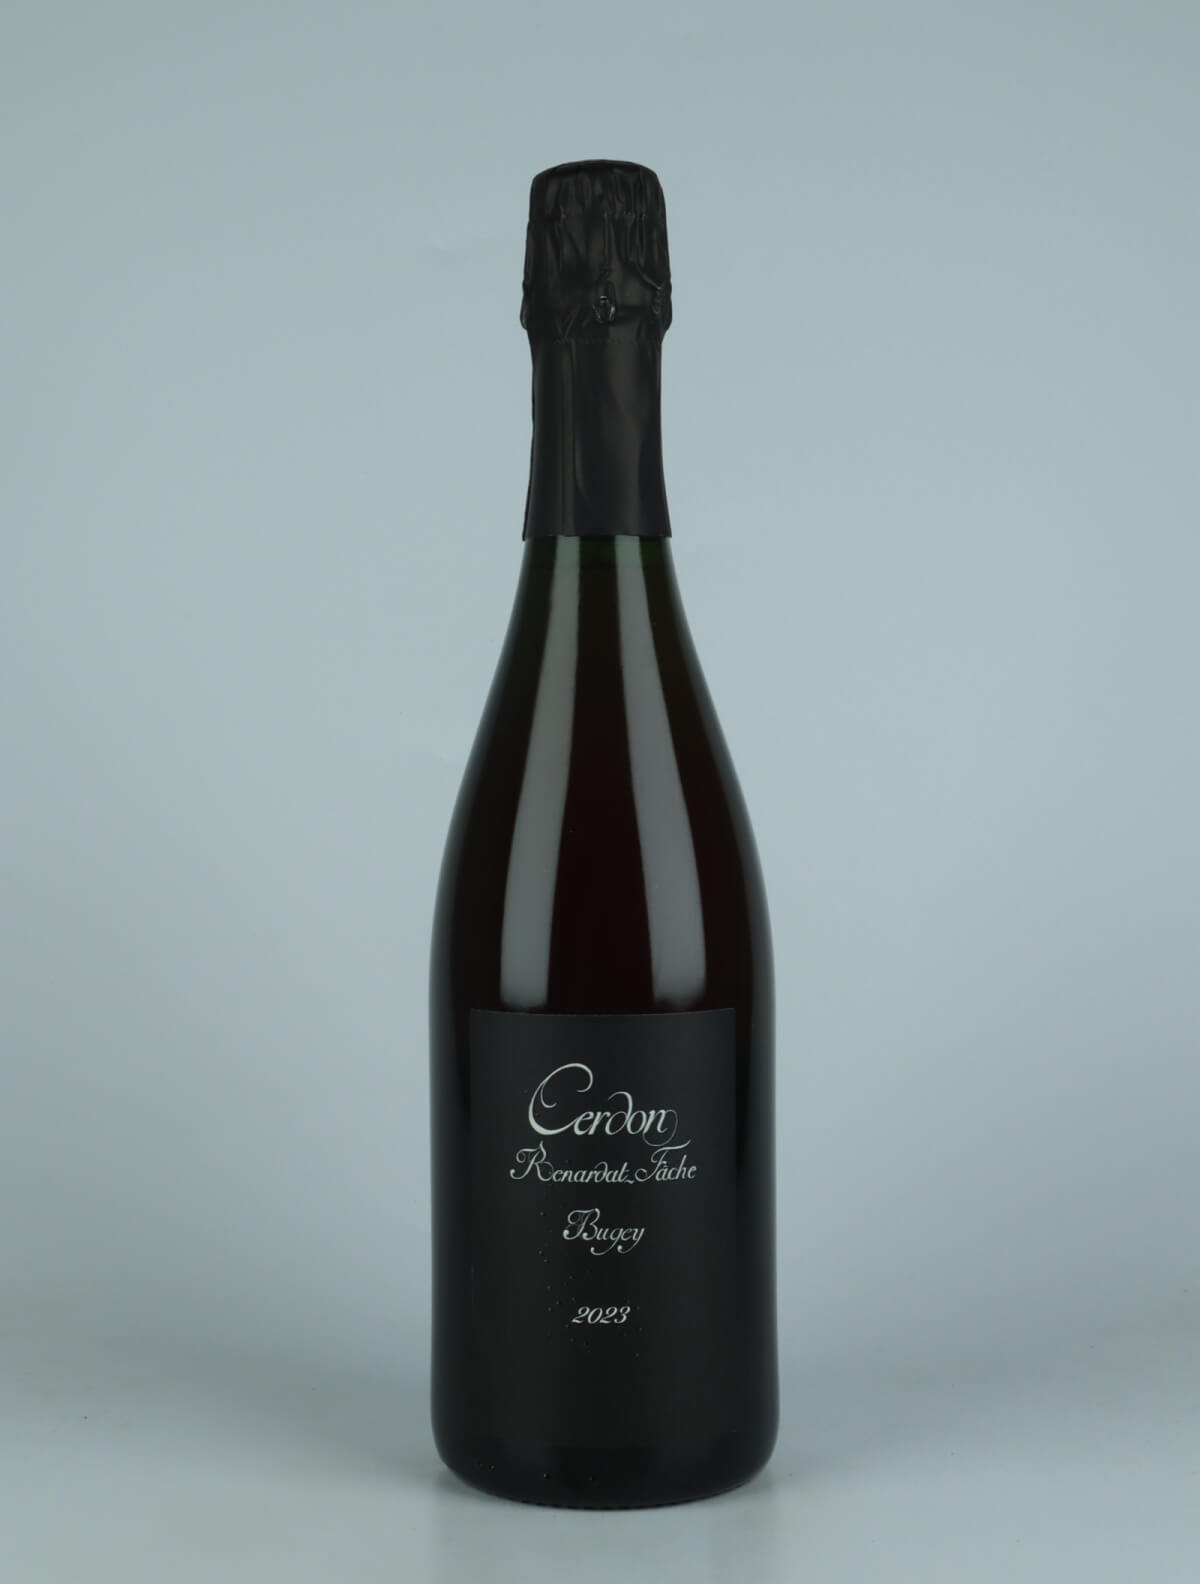 A bottle 2023 Bugey Cerdon Sweet wine from Renardat Fache, Bugey in France